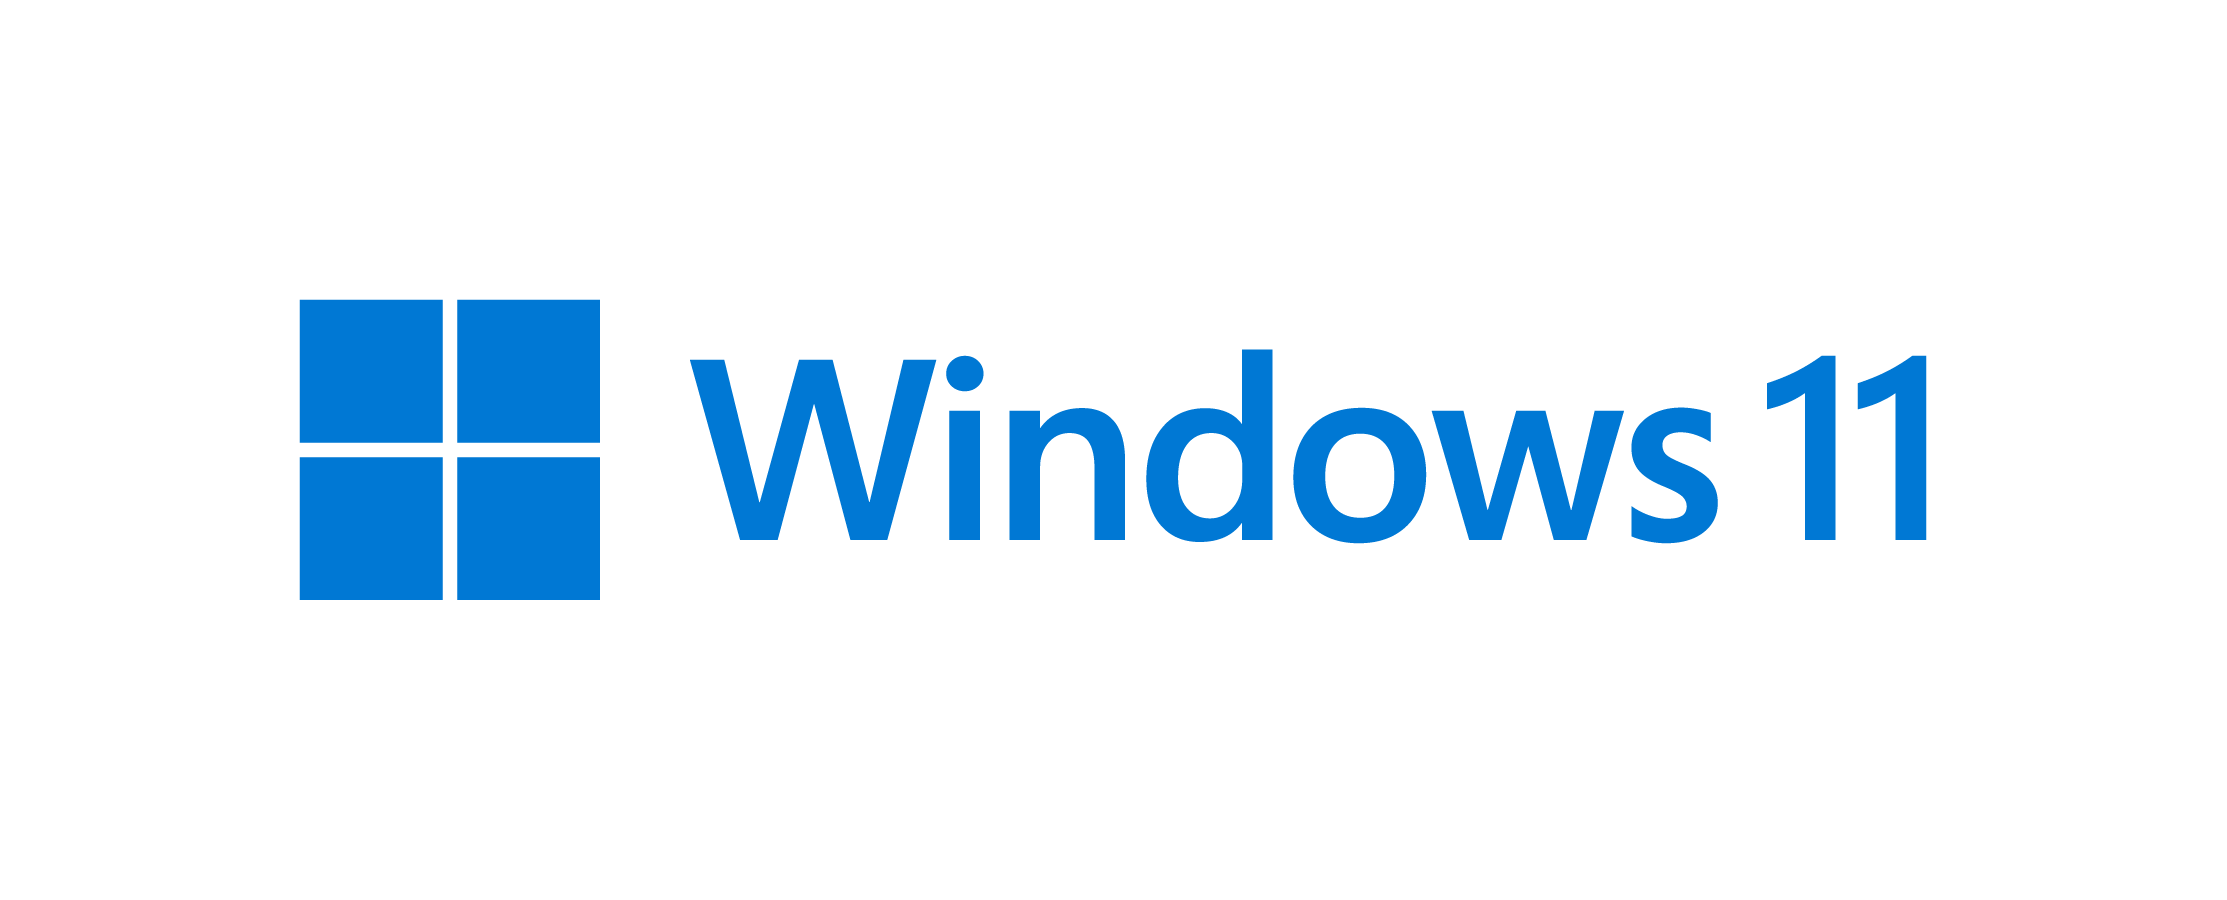 Windows 11 Pro for Education